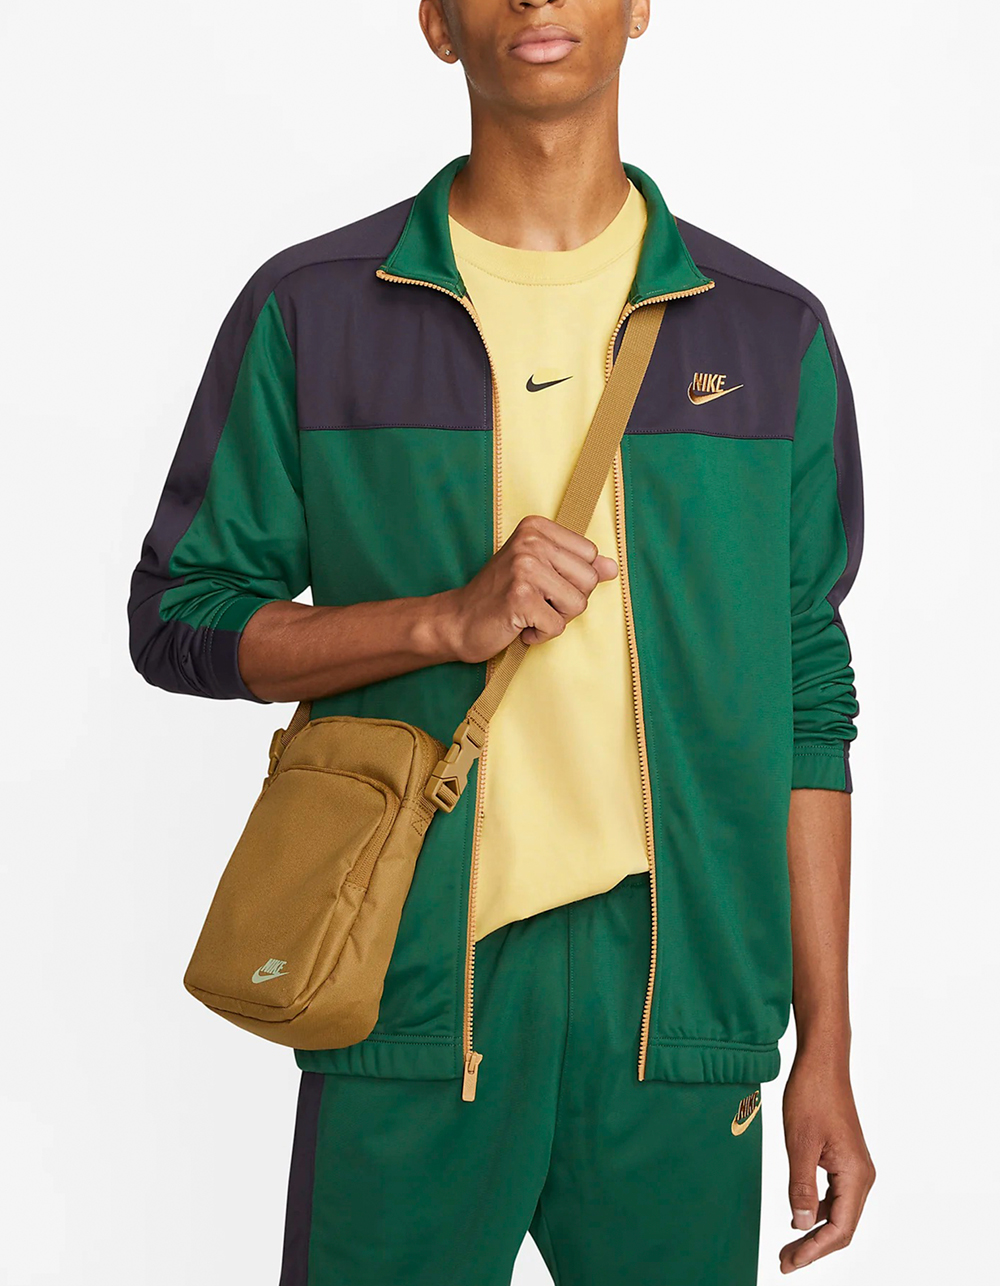 Buy the Nike Nike Heritage bum bag with iridescent logo in khaki on